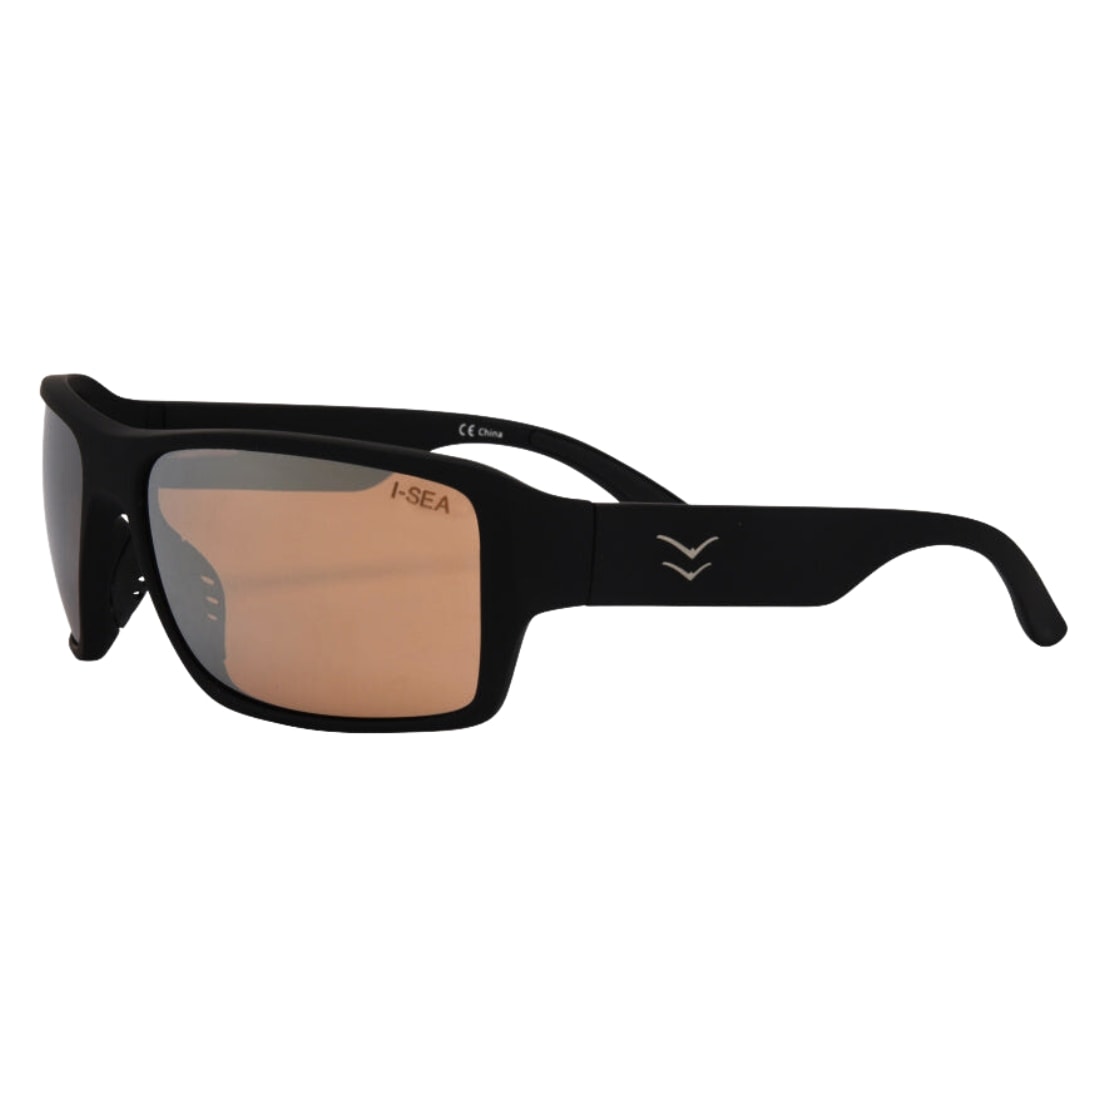 I-Sea Free Bird Wrap Around Polarised Sunglasses - Black/Copper Polarized Lens - Wrap Around Sunglasses by I-Sea